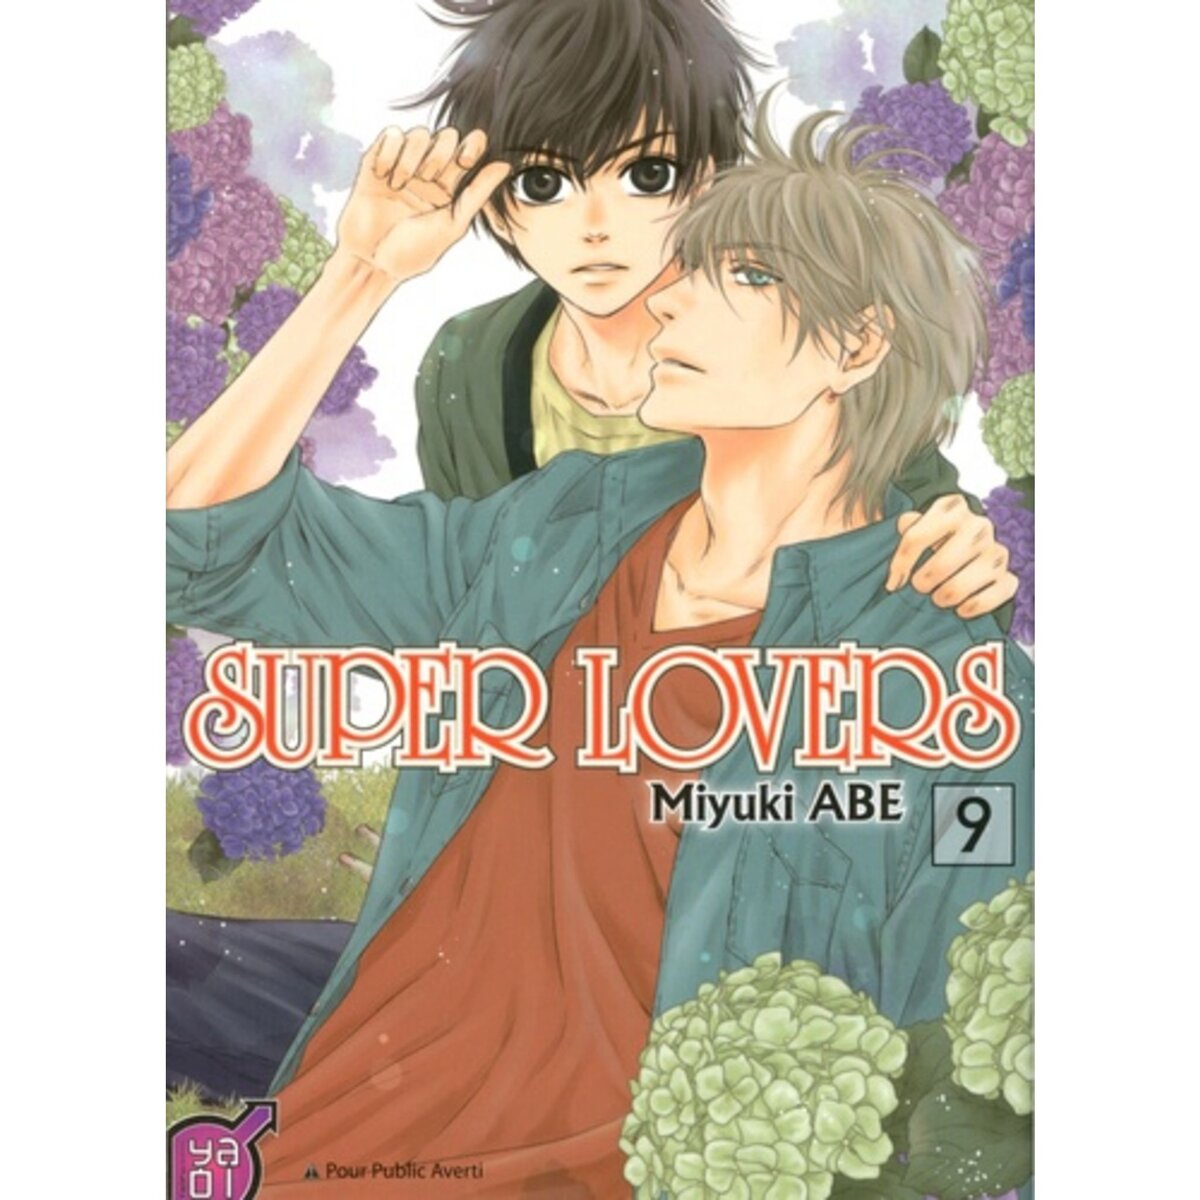  SUPER LOVERS TOME 9, Abe Miyuki